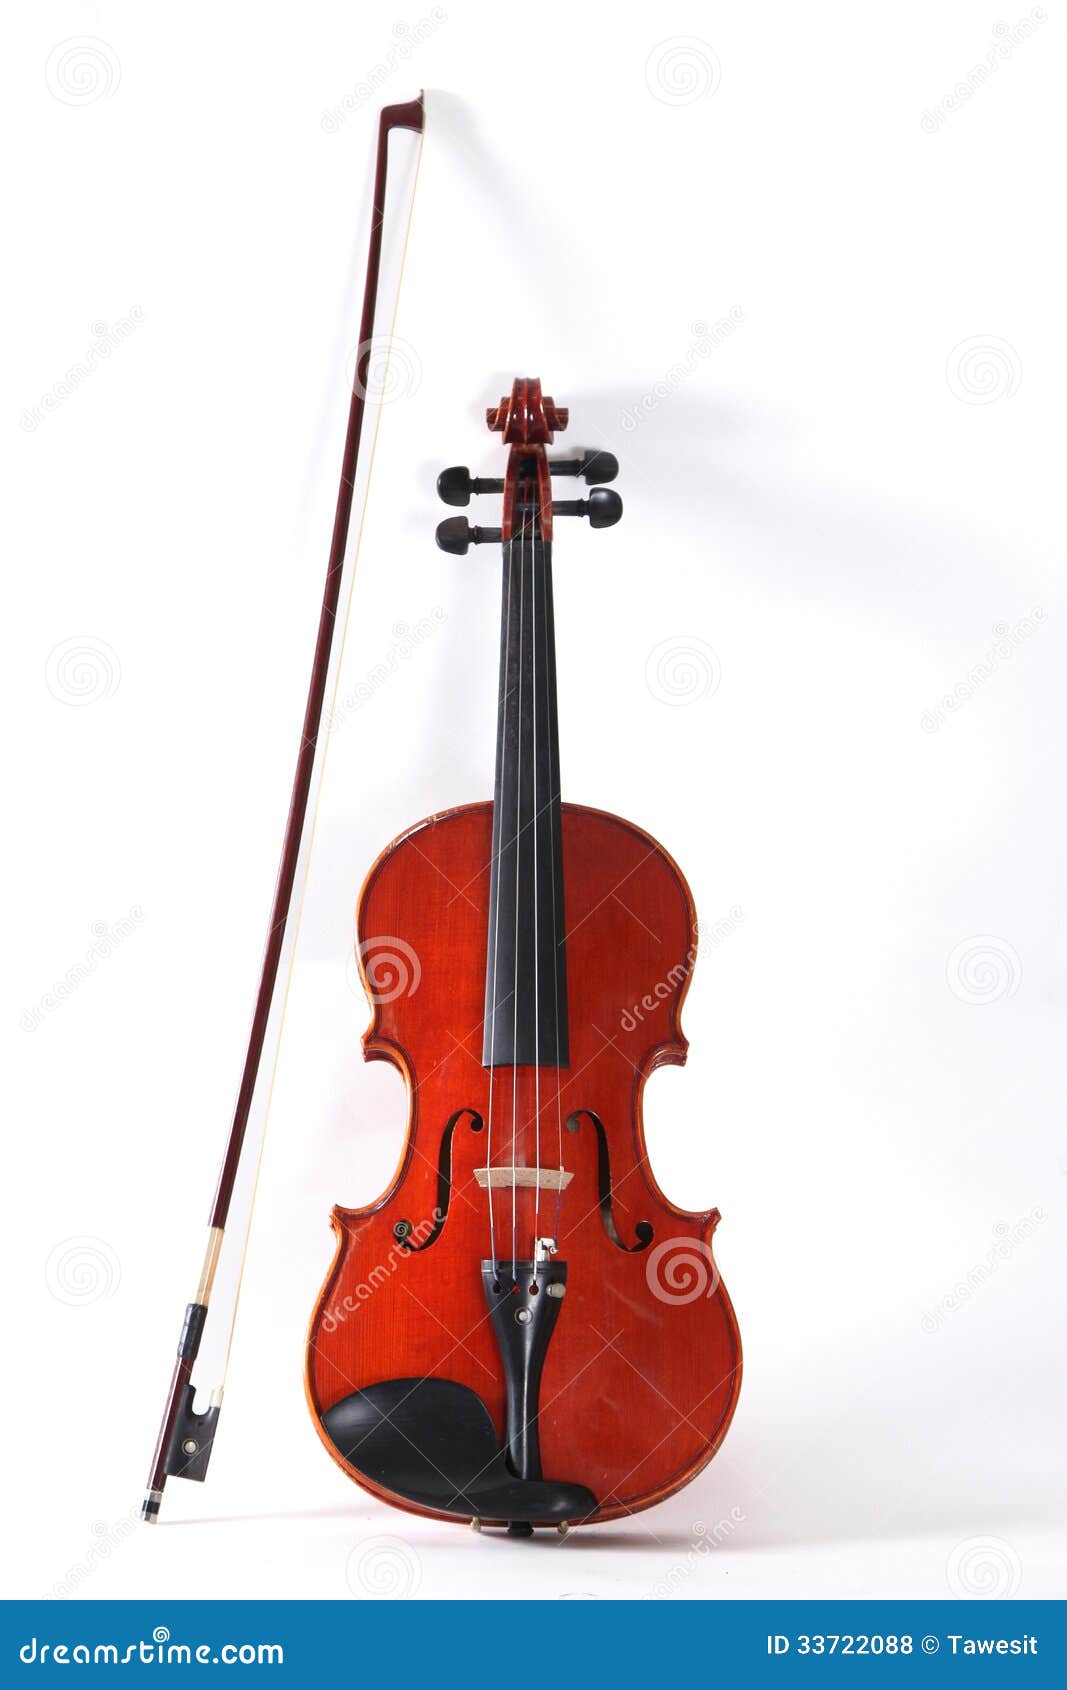 violin classical music instrument